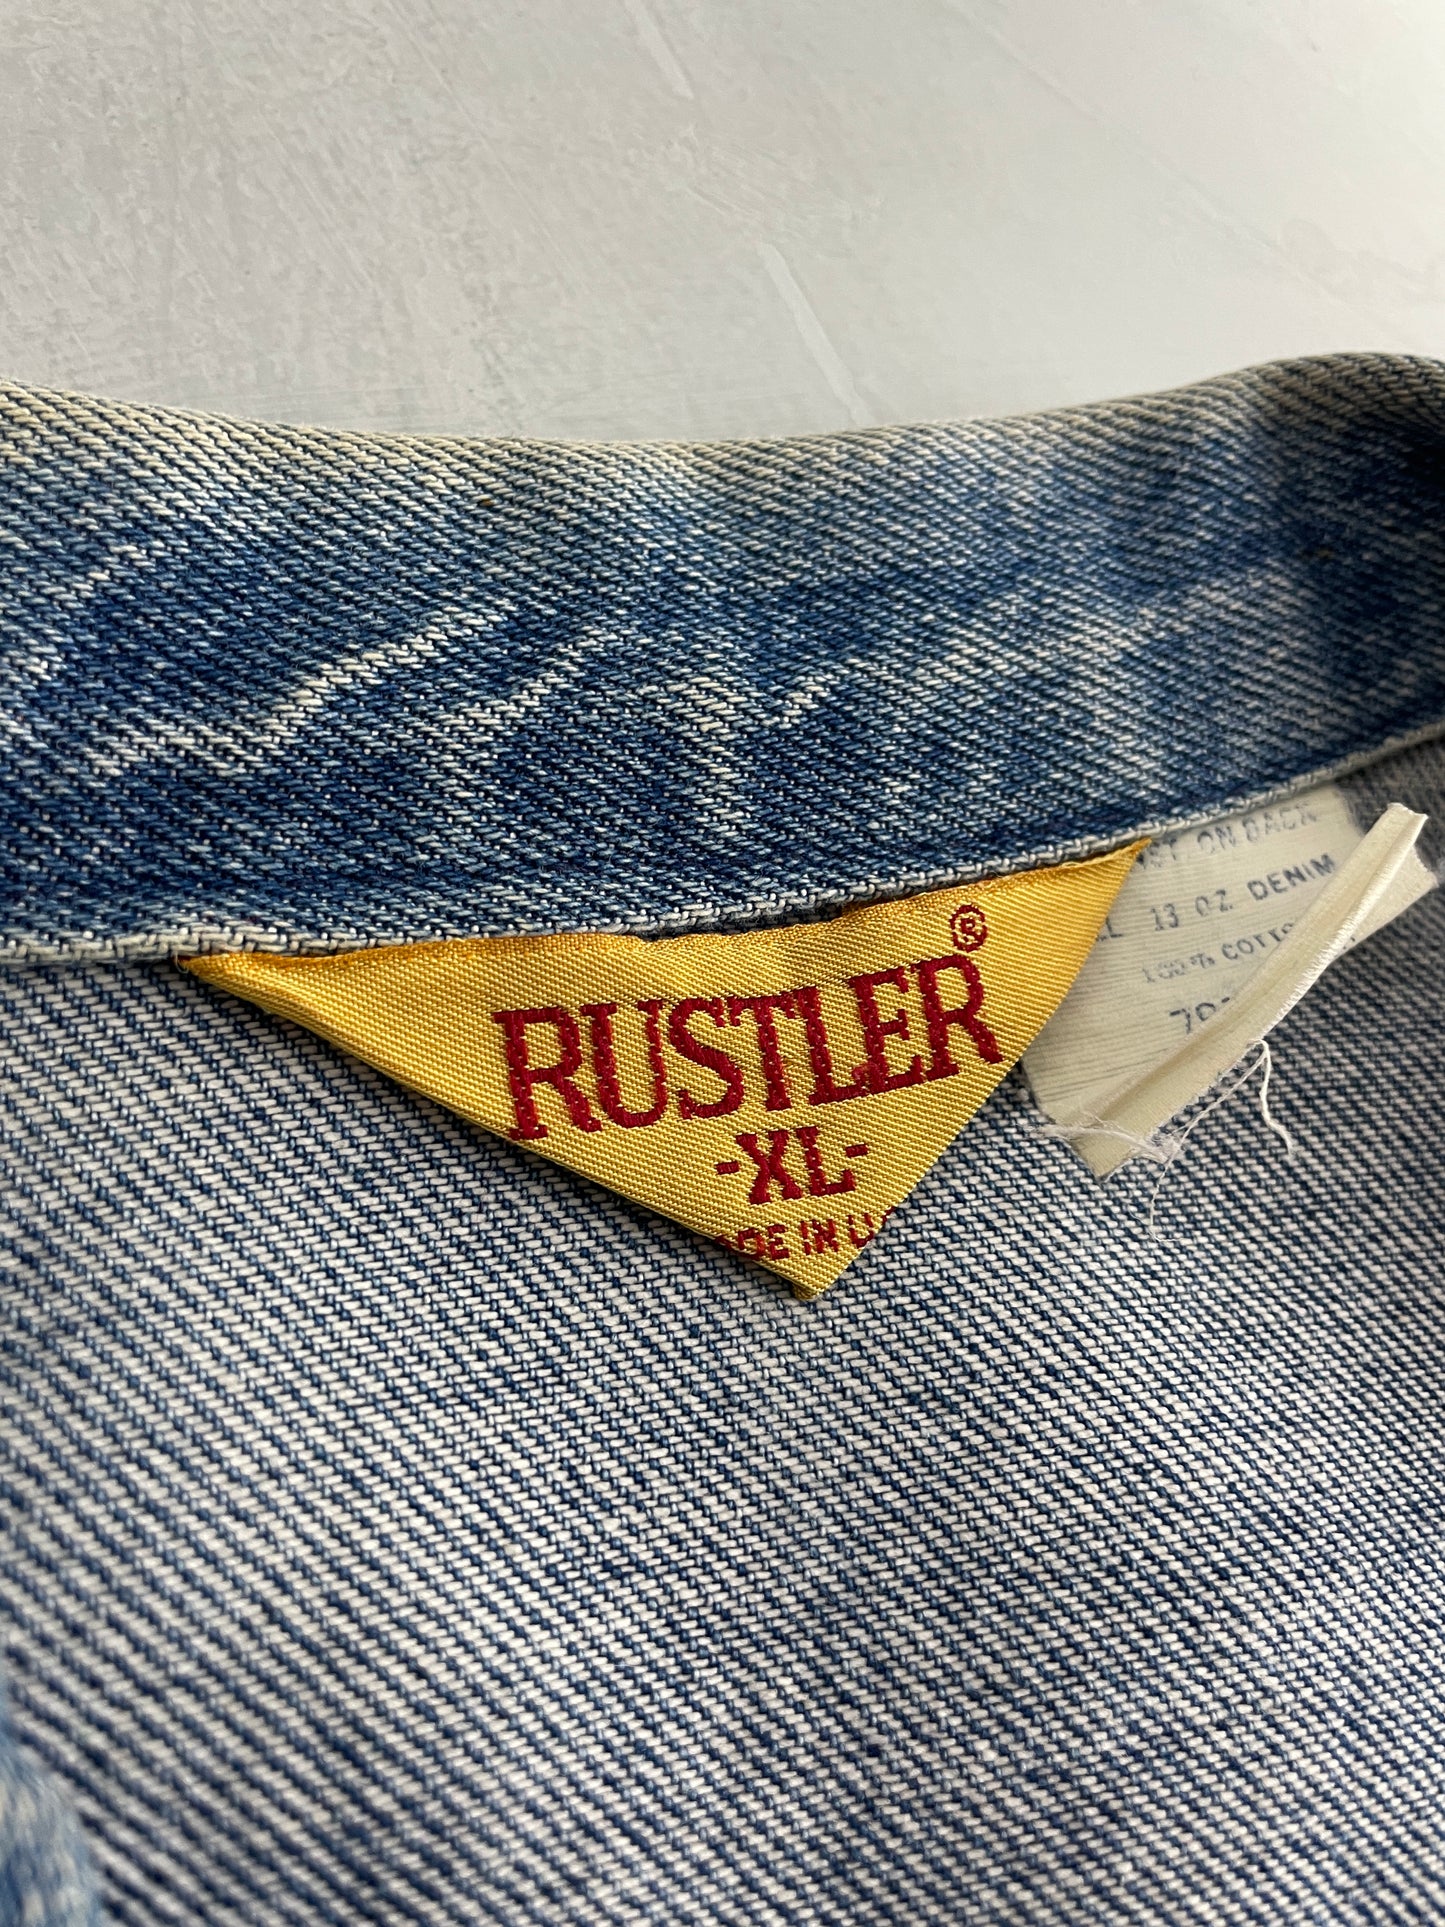 70's Rustler Denim Jacket [XL]